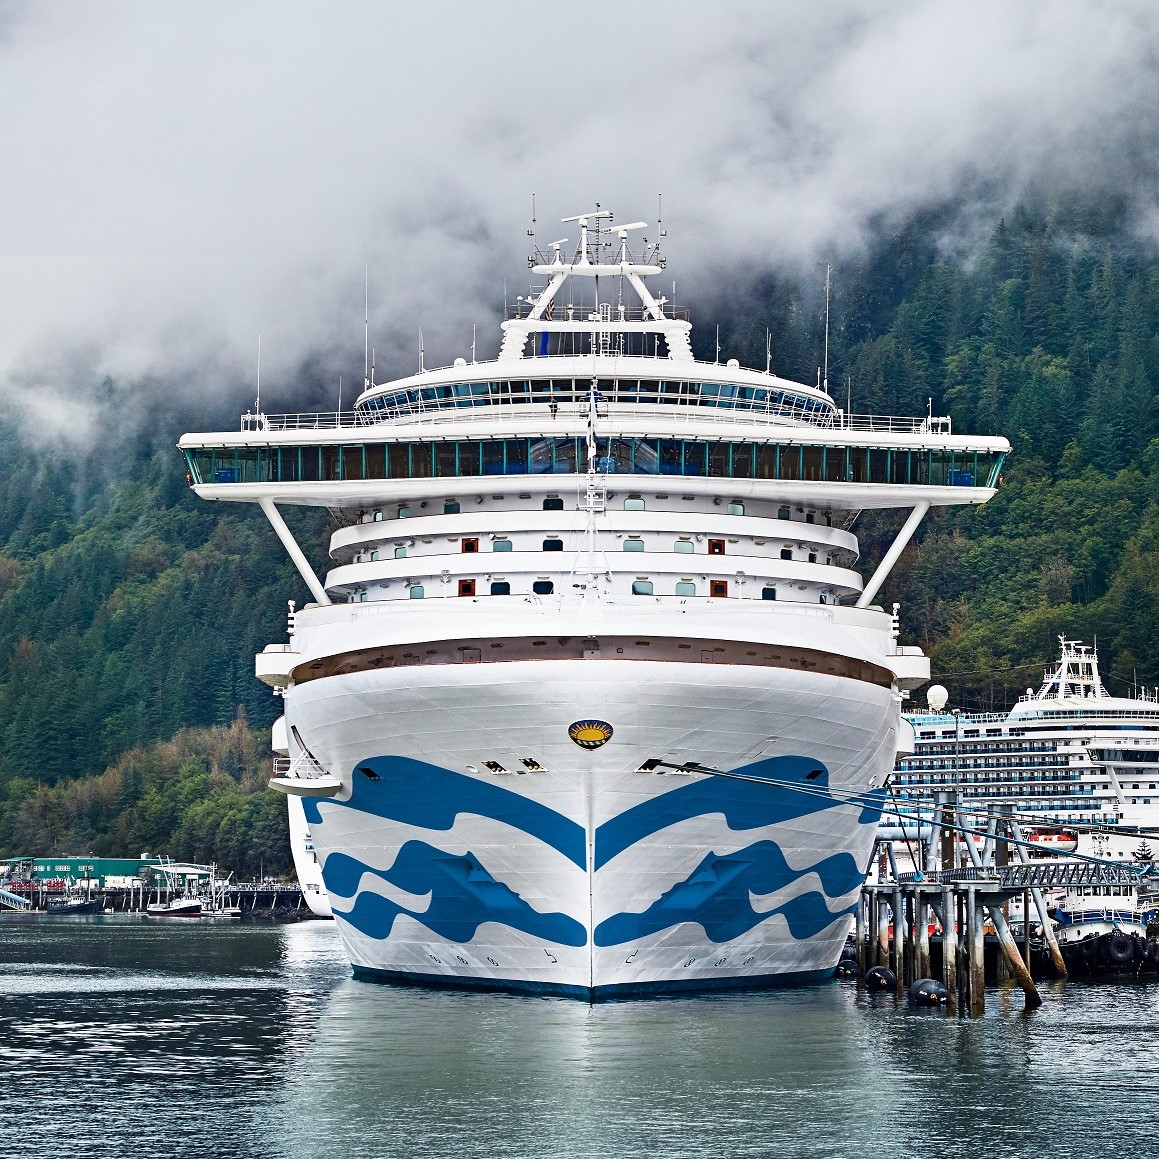 Princess Cruises’ 2022 Alaska season features 6 MedallionClass ships